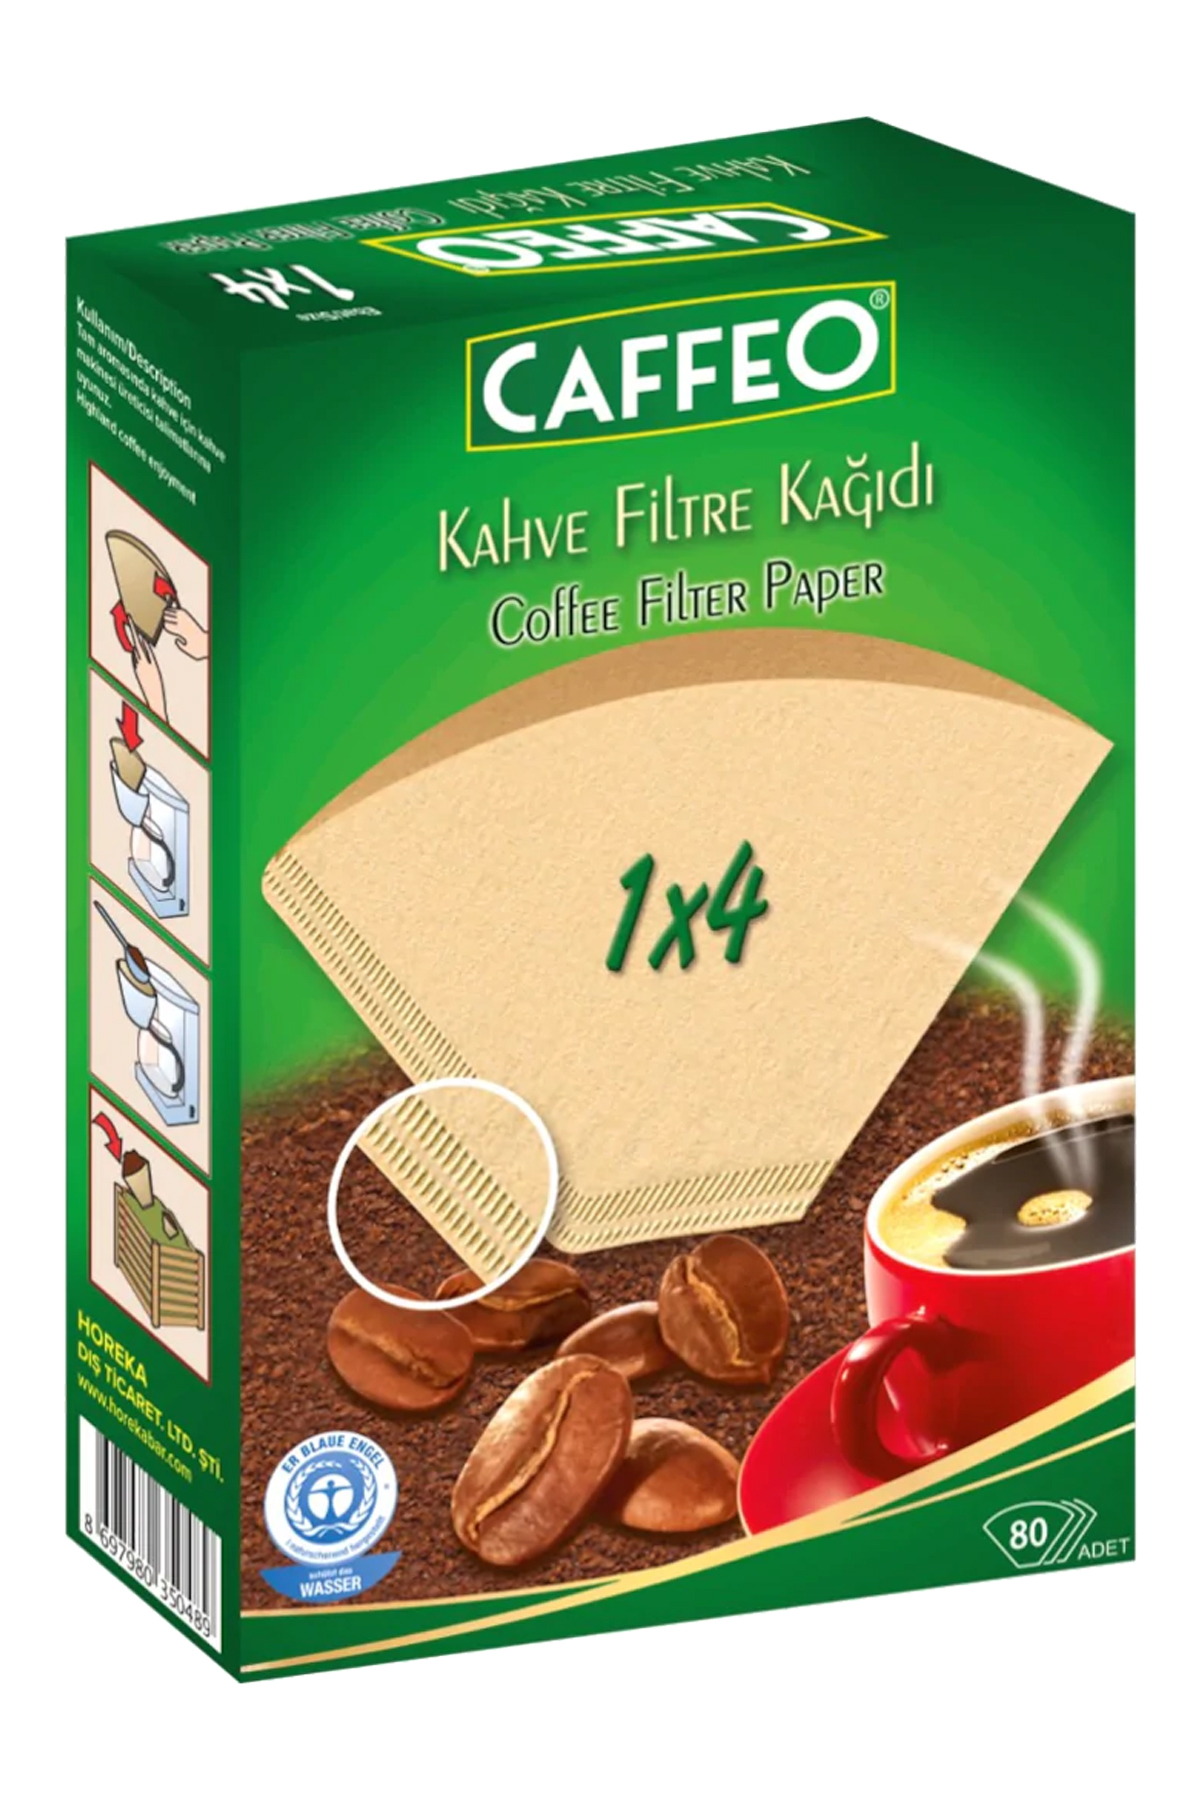 Caffeo Kahve Filtre Kağıdı 1X4 80 Adet